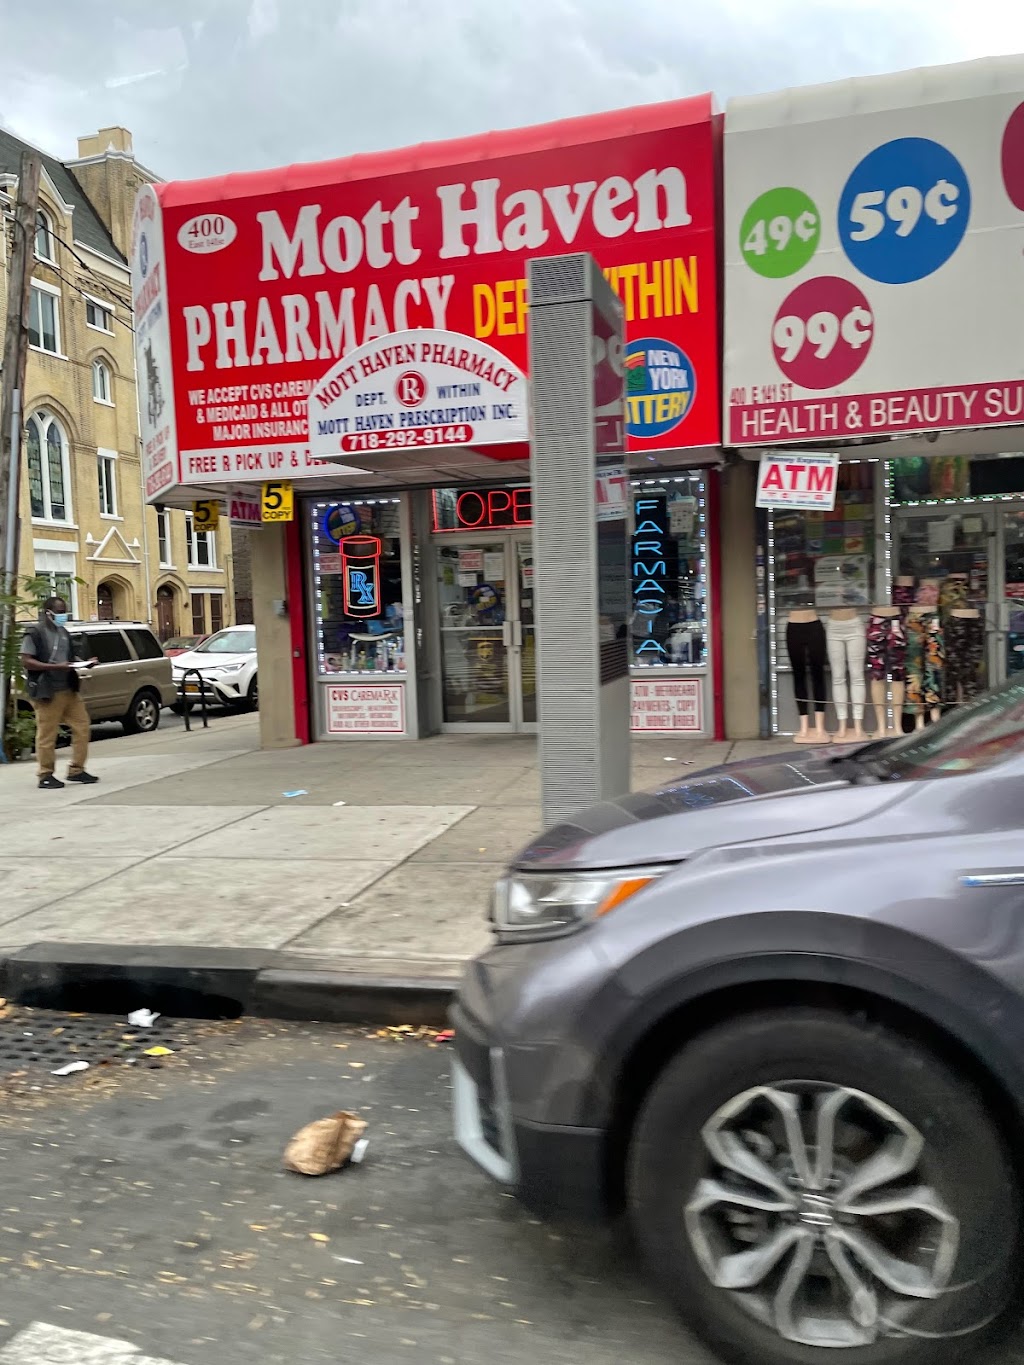 Mott Haven Pharmacy | 400 E 141st St, The Bronx, NY 10454 | Phone: (718) 292-9144